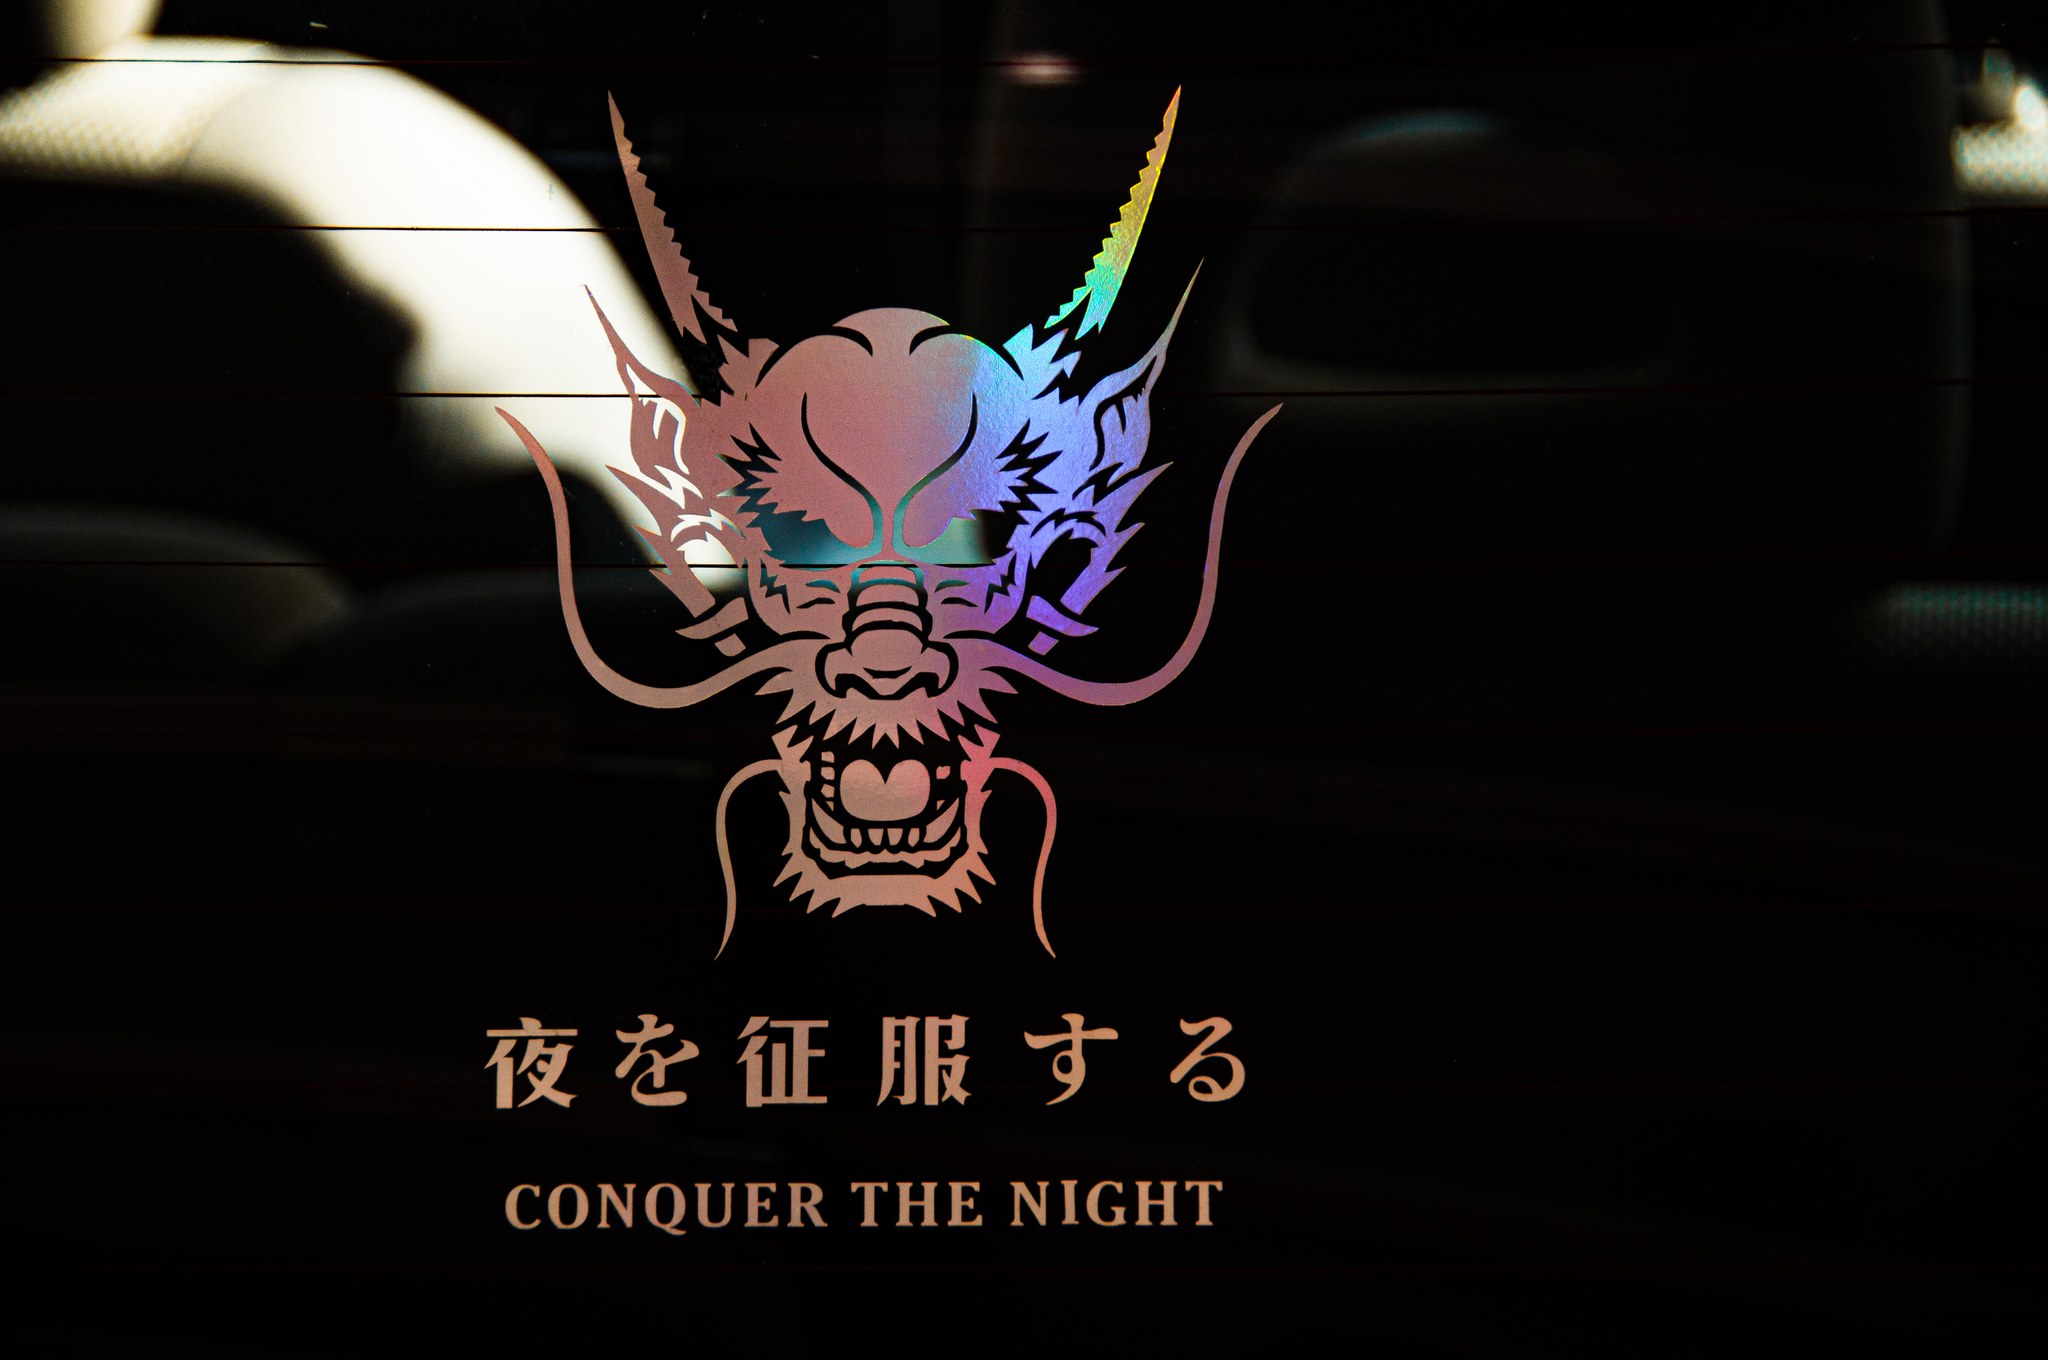 Dragon Head "Conquer the Night" | Vinyl Sticker